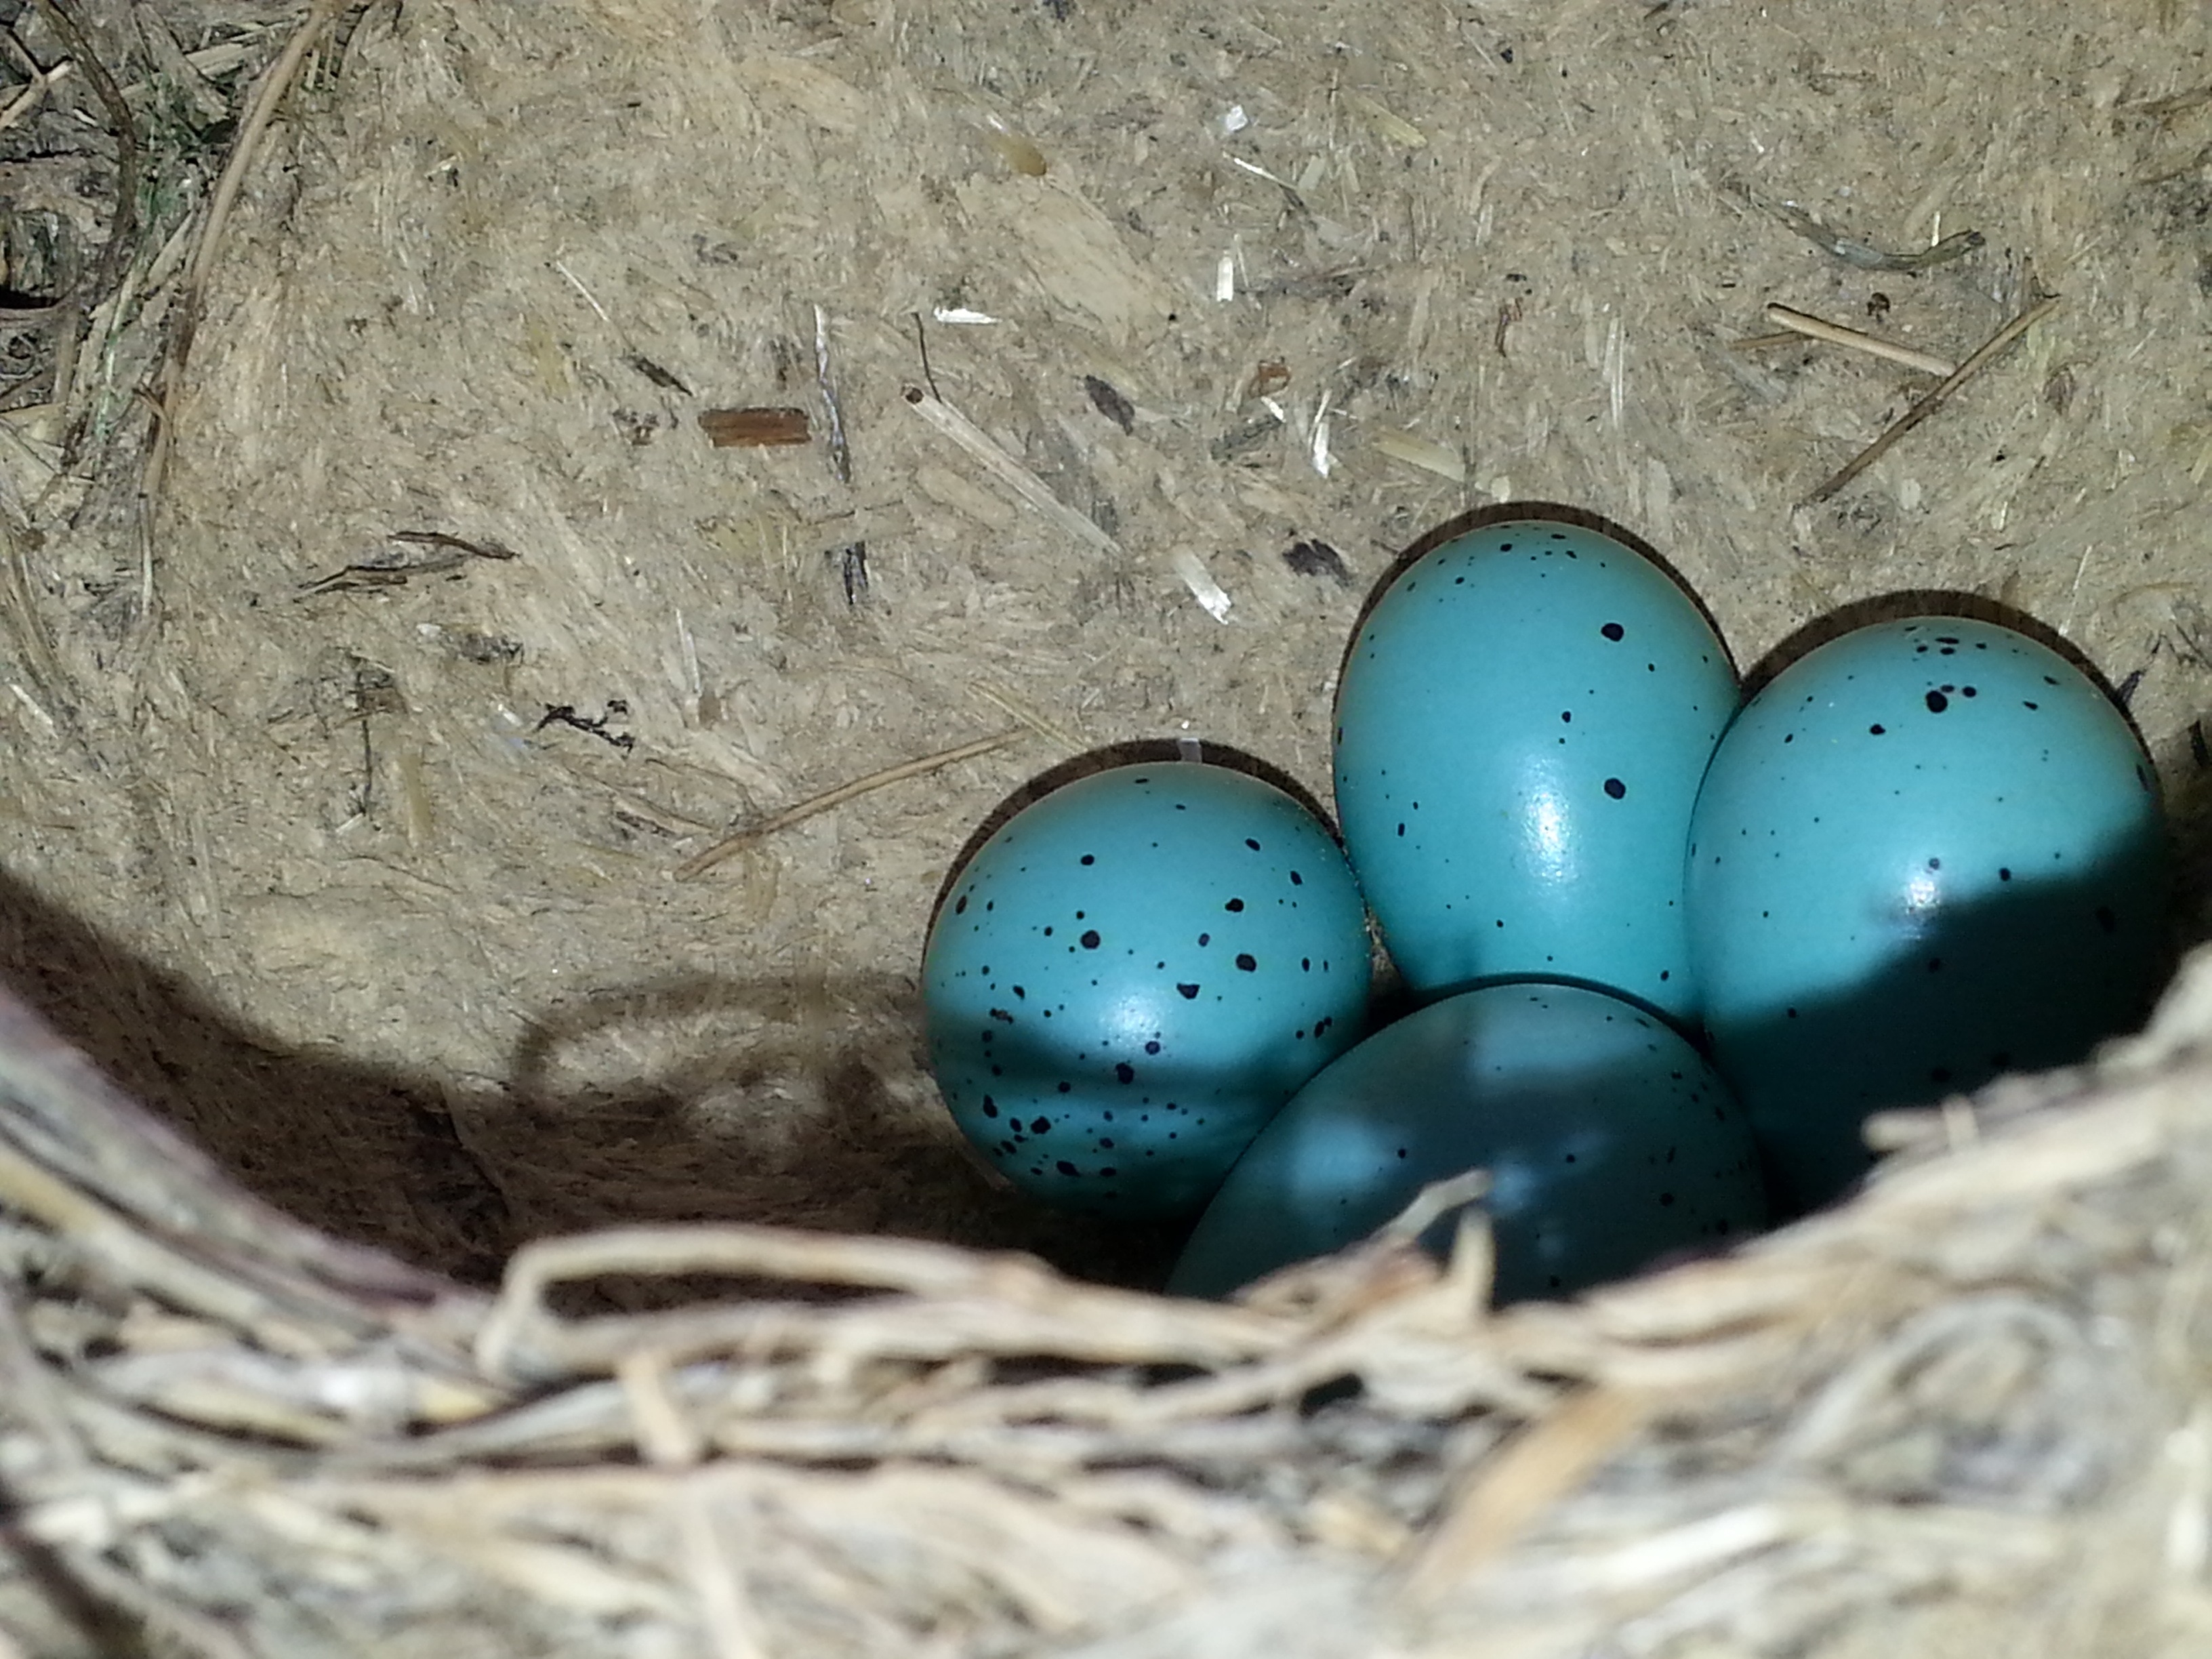 4 blue eggs